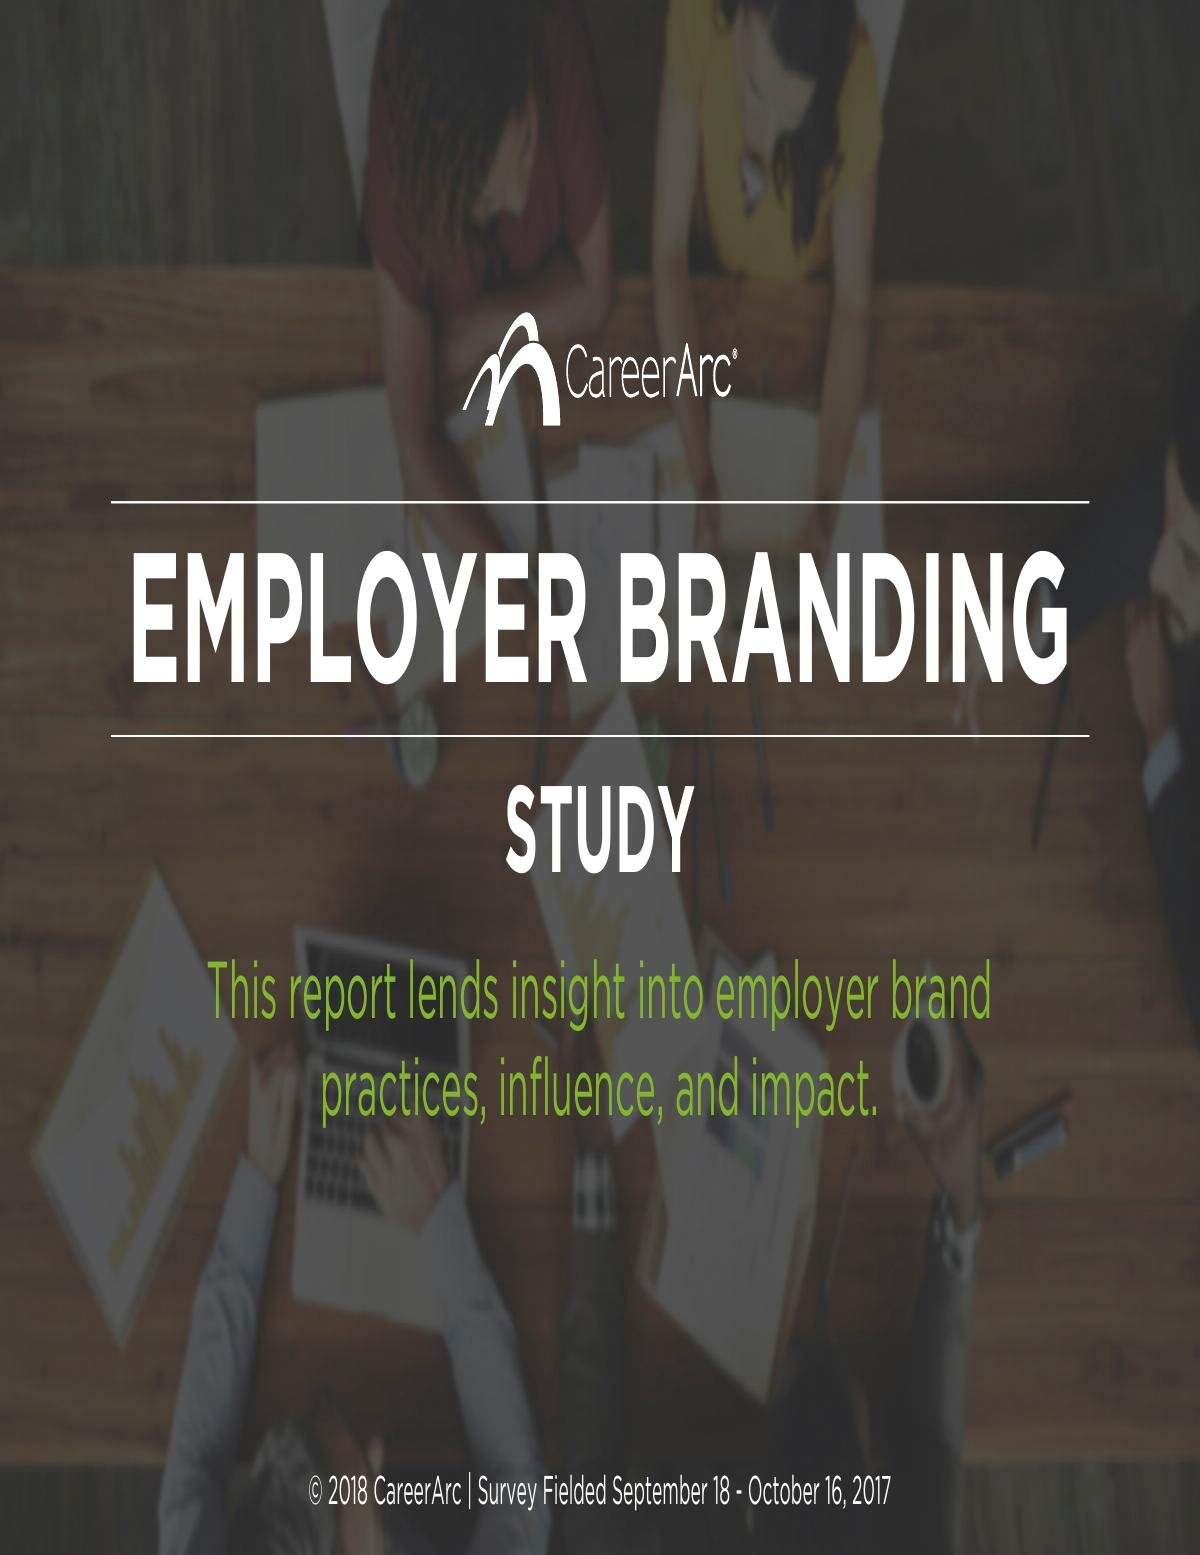 CareerArc's Employer Branding Study